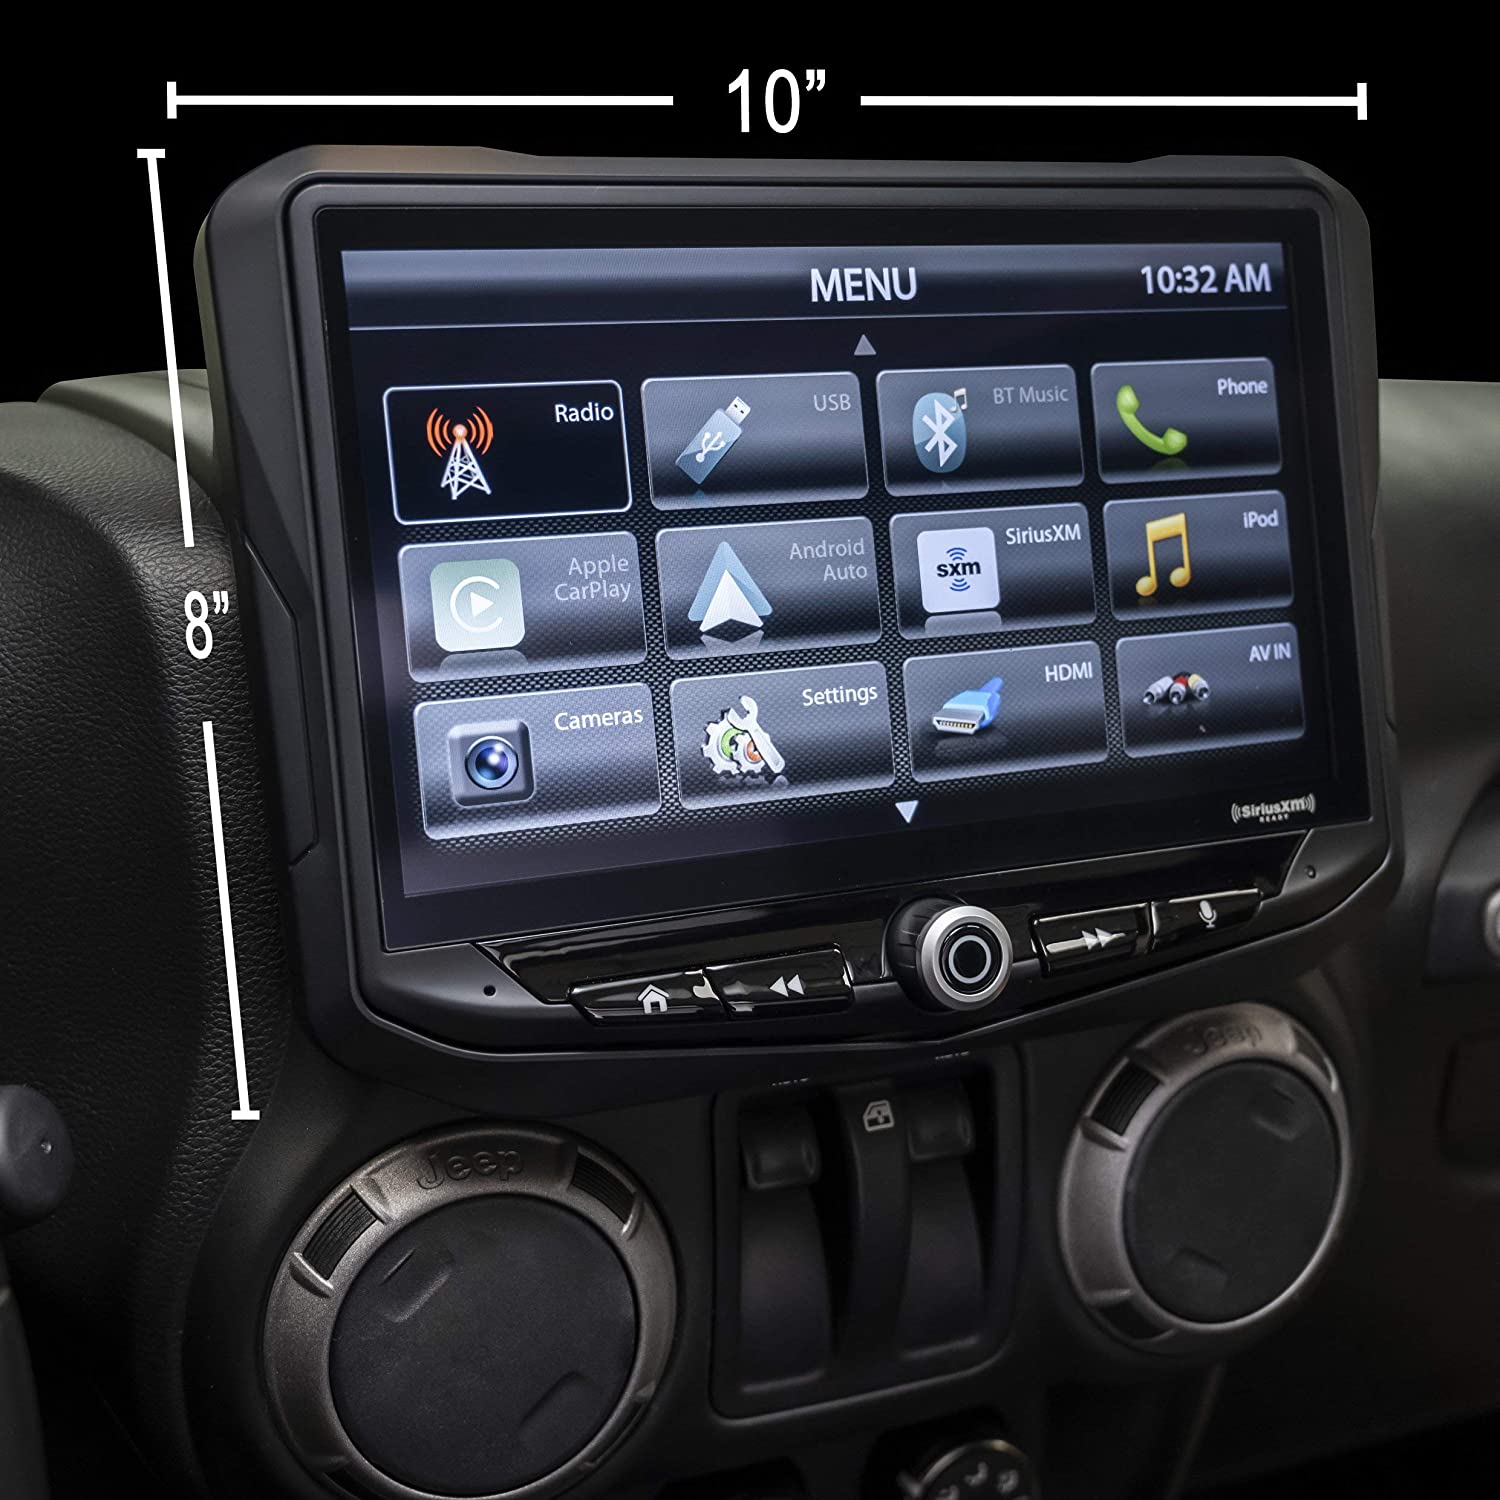 Jeep Wrangler JK (2011-2018) HEIGH10 10" Radio Kit with Spare Tire Backup Camera